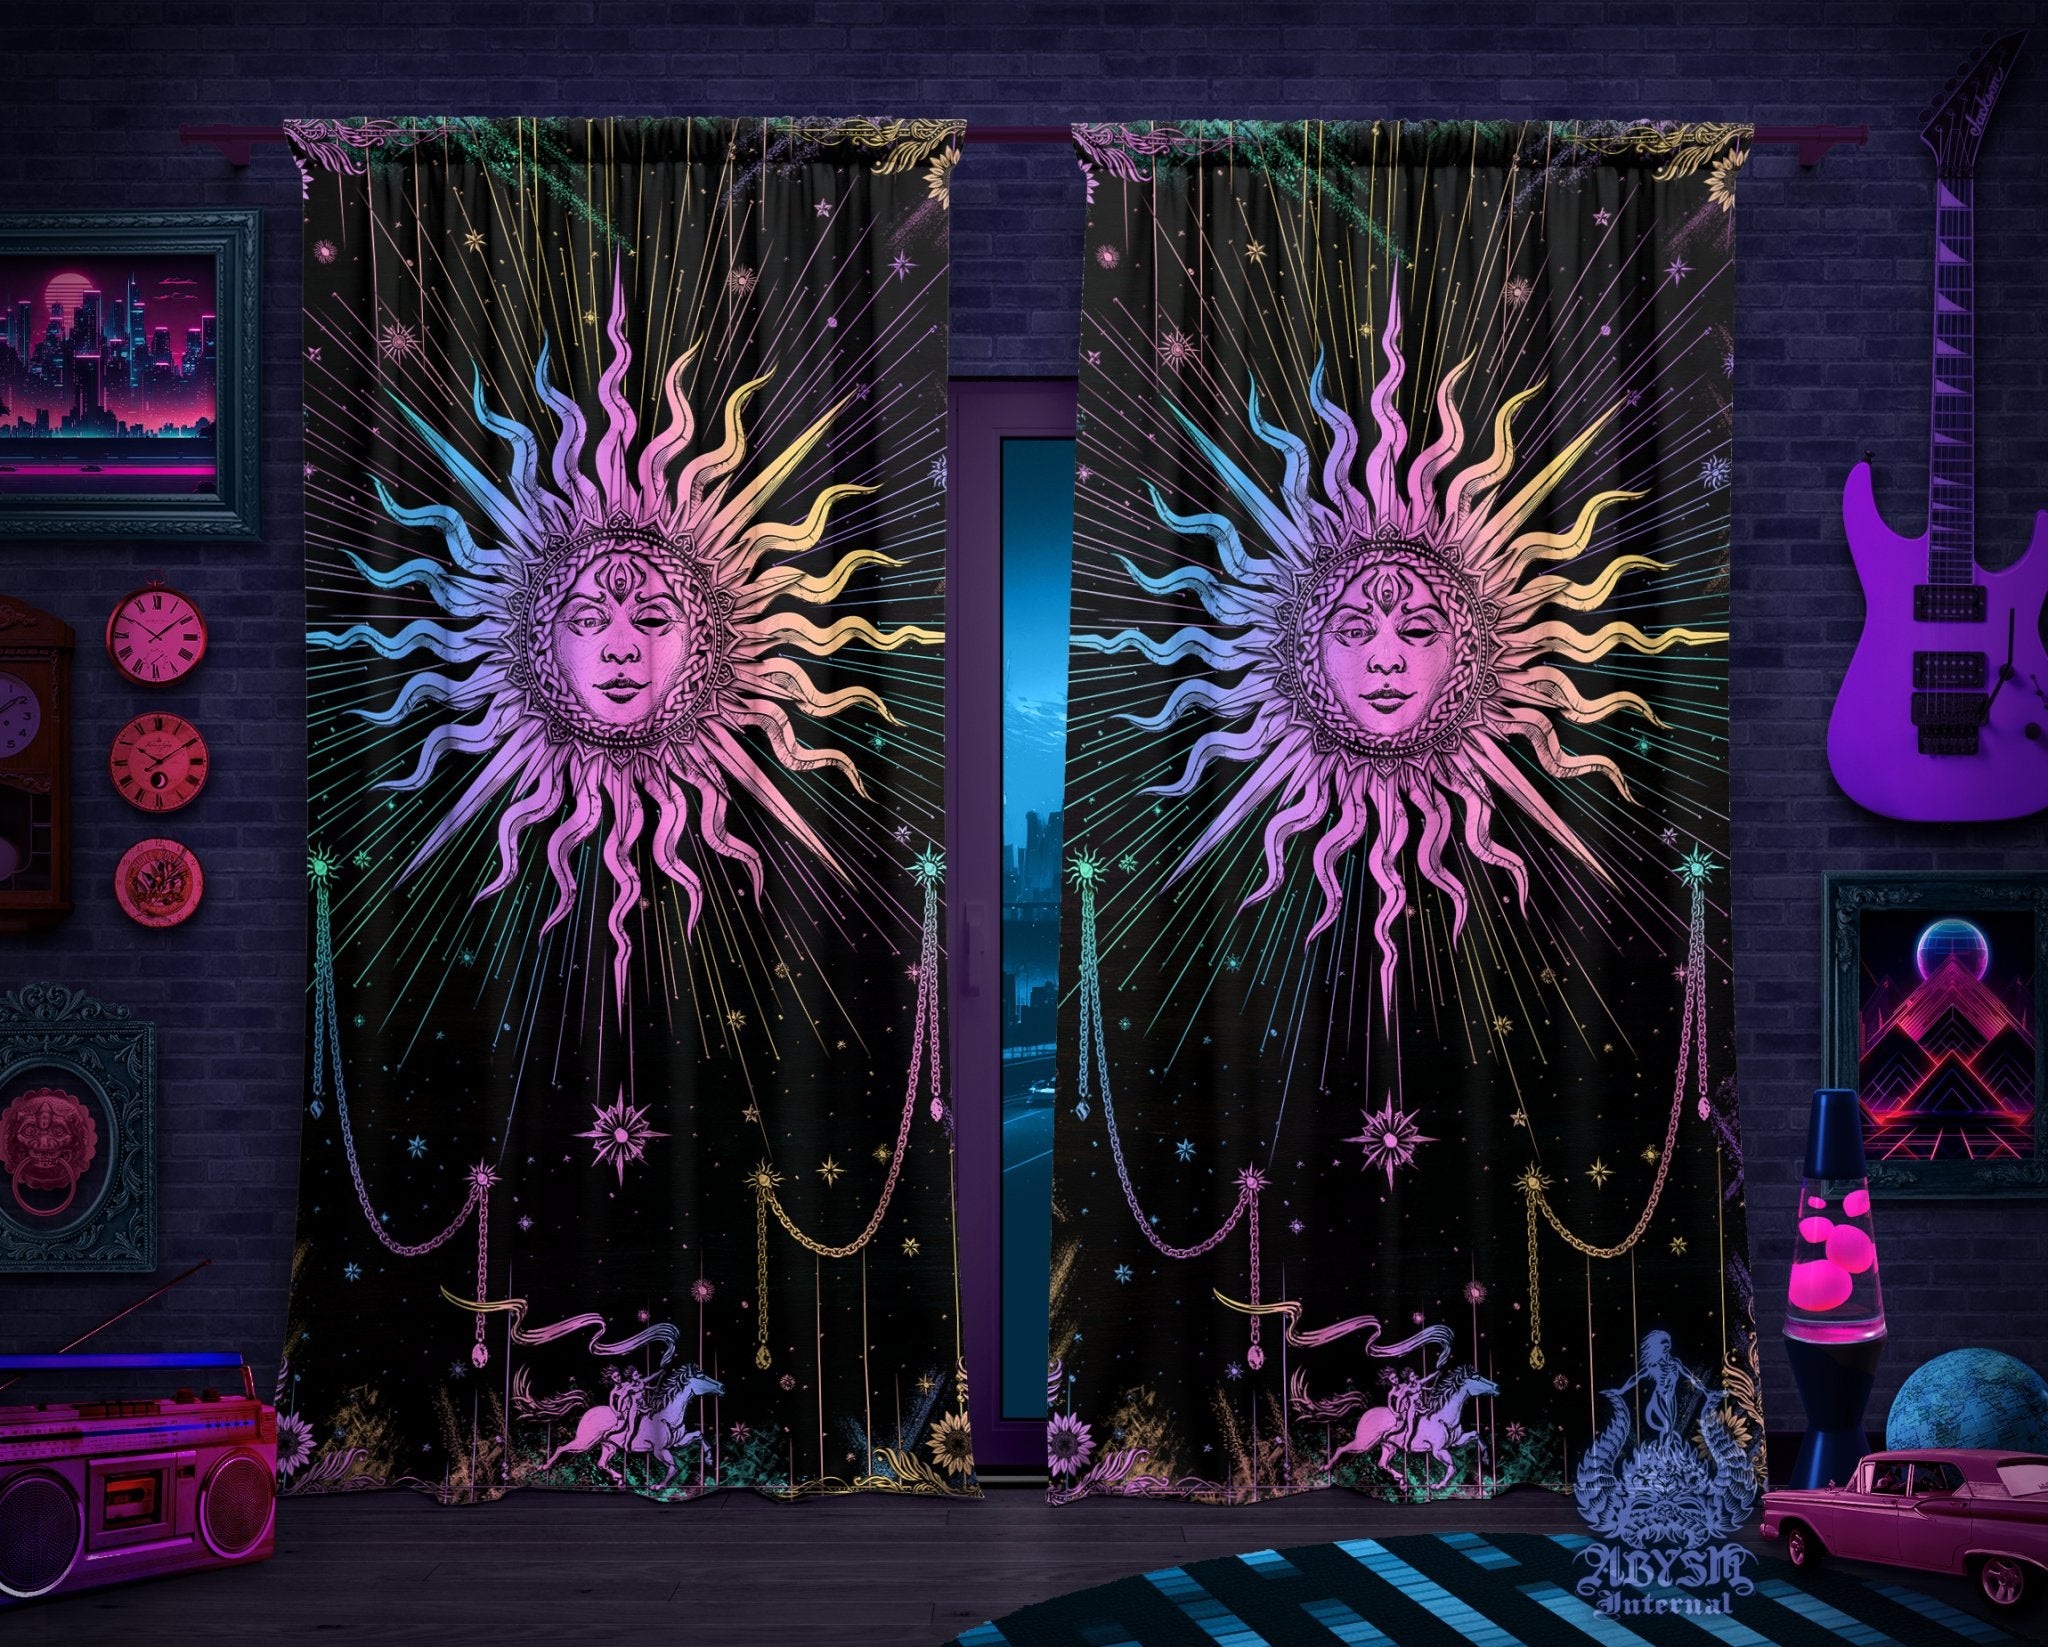 Pastel Sun Curtains, 50x84' Printed Window Panels, Colorful Indie Home Decor, Tarot Arcana, Esoteric Art Print - Dark Pastel - Abysm Internal